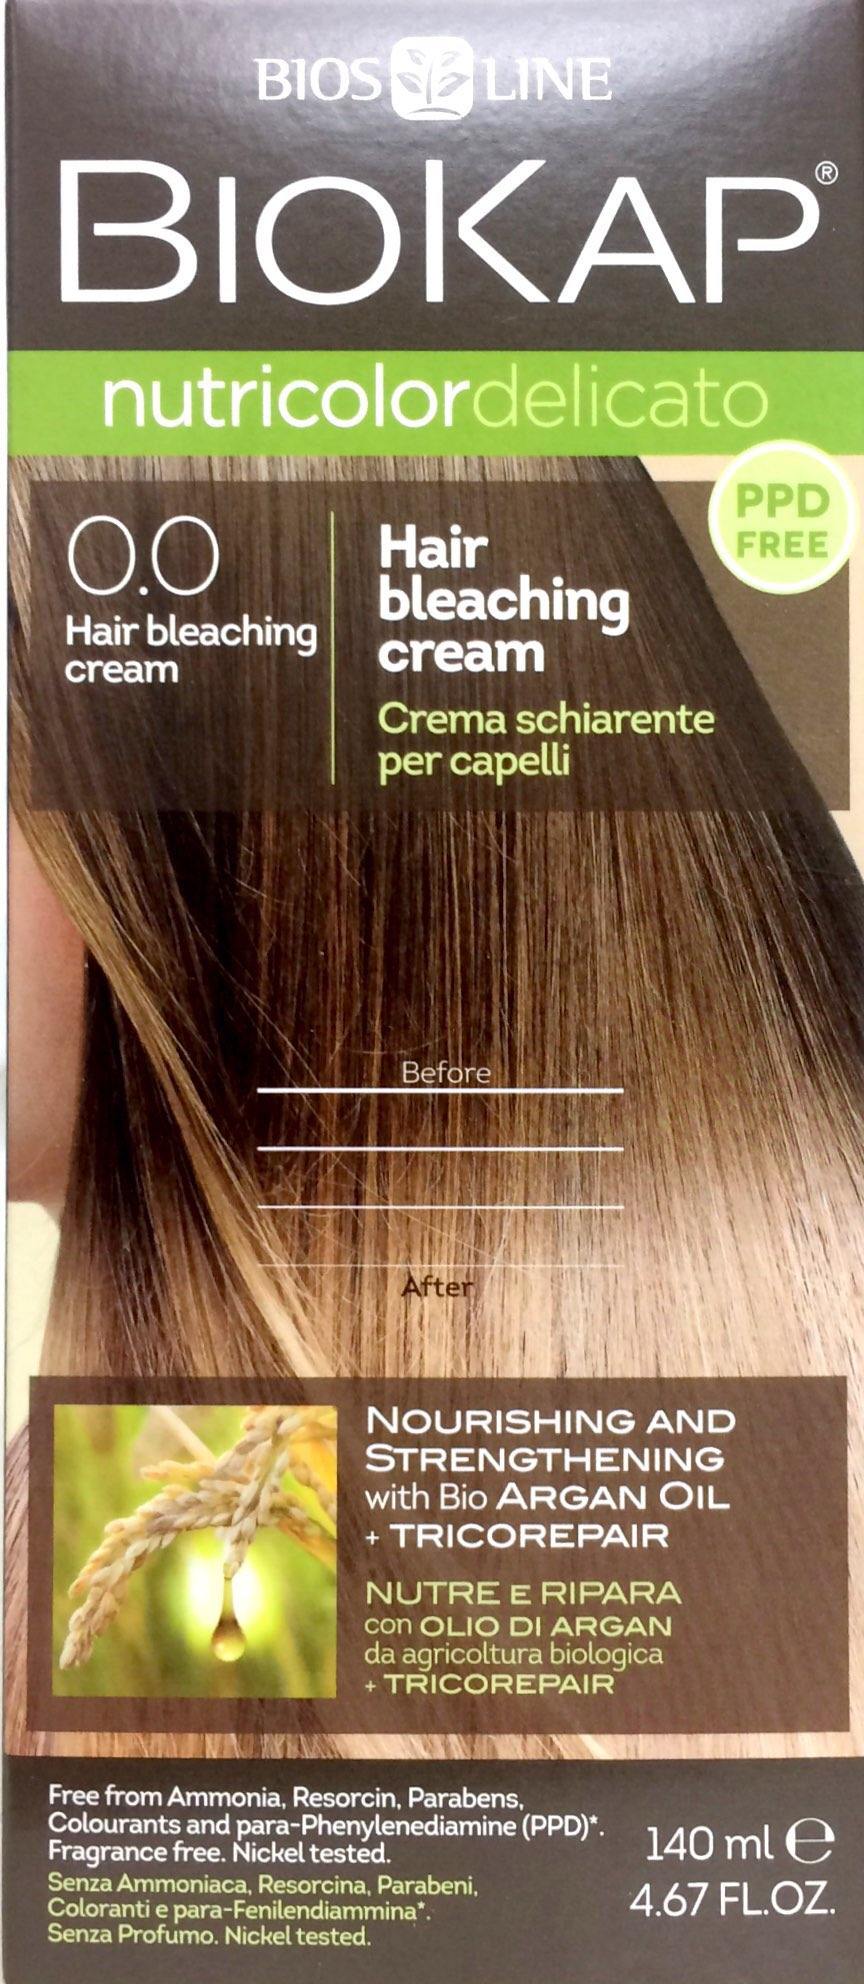 Biokap Nutricolor Delicato Hair Bleaching Cream 140ml - DominionRoadPharmacy